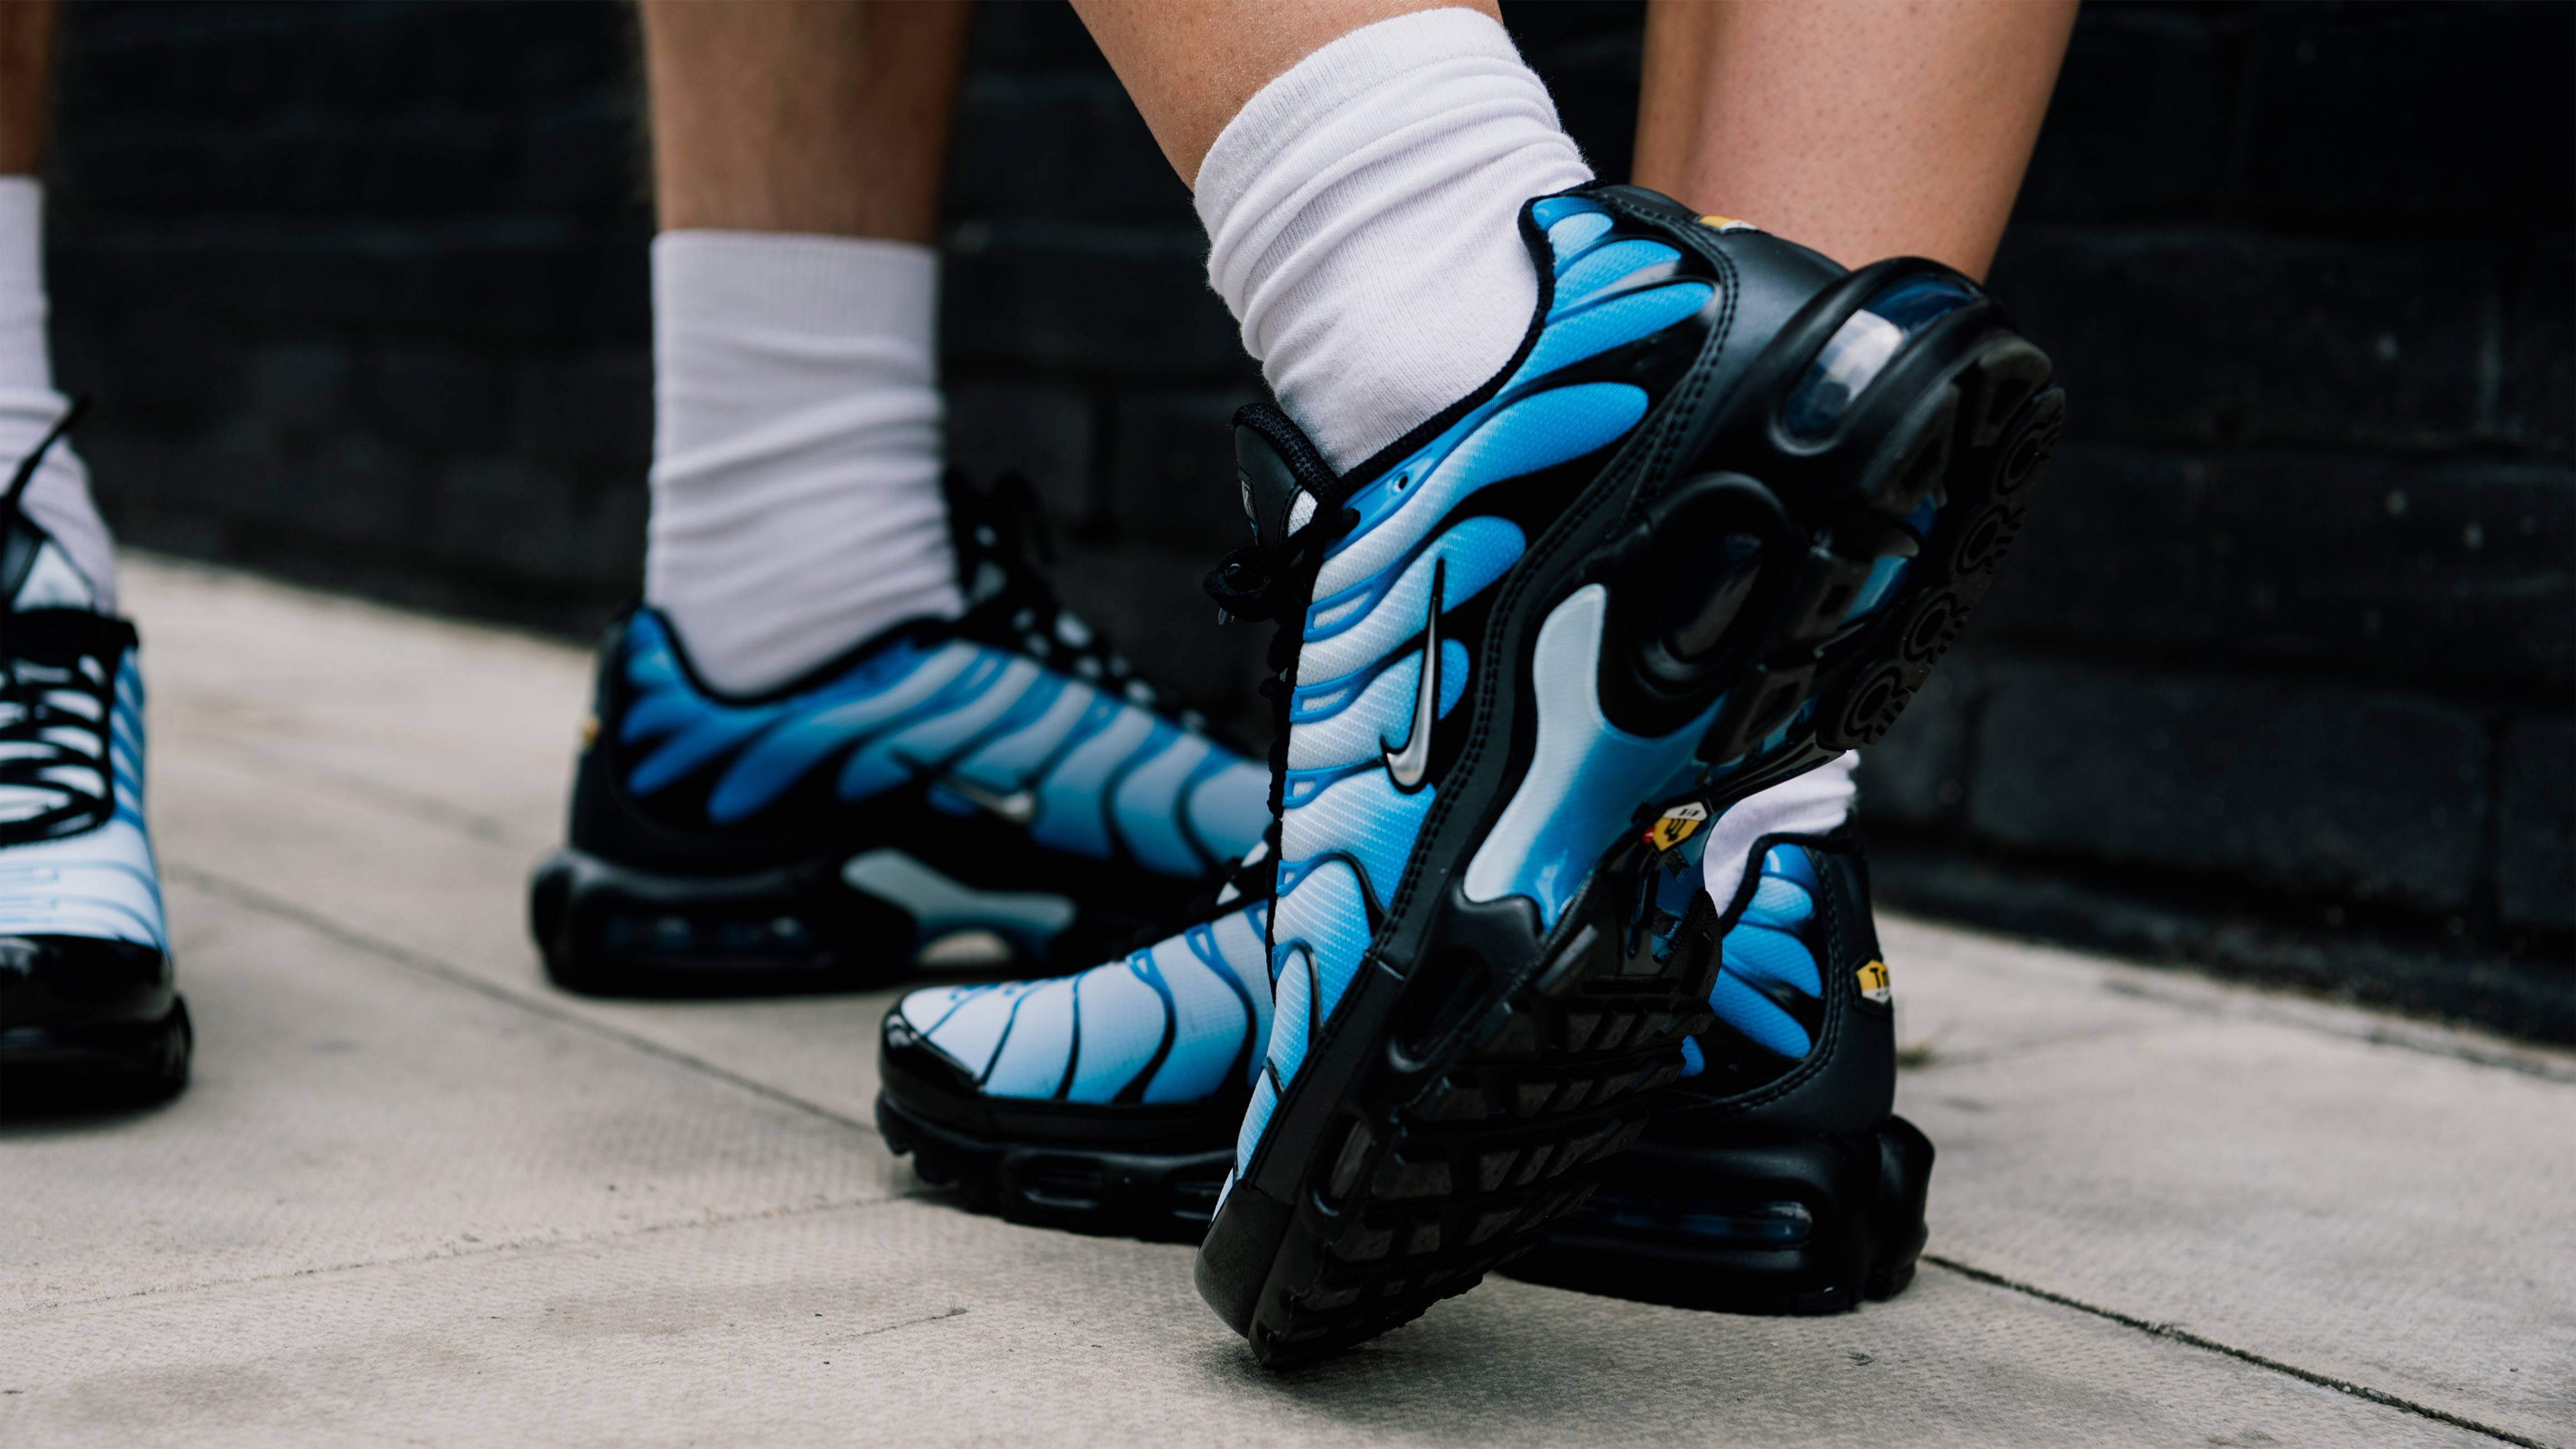 The Nike TN Air Max Plus Black/Blue Gradient Is This Summer's